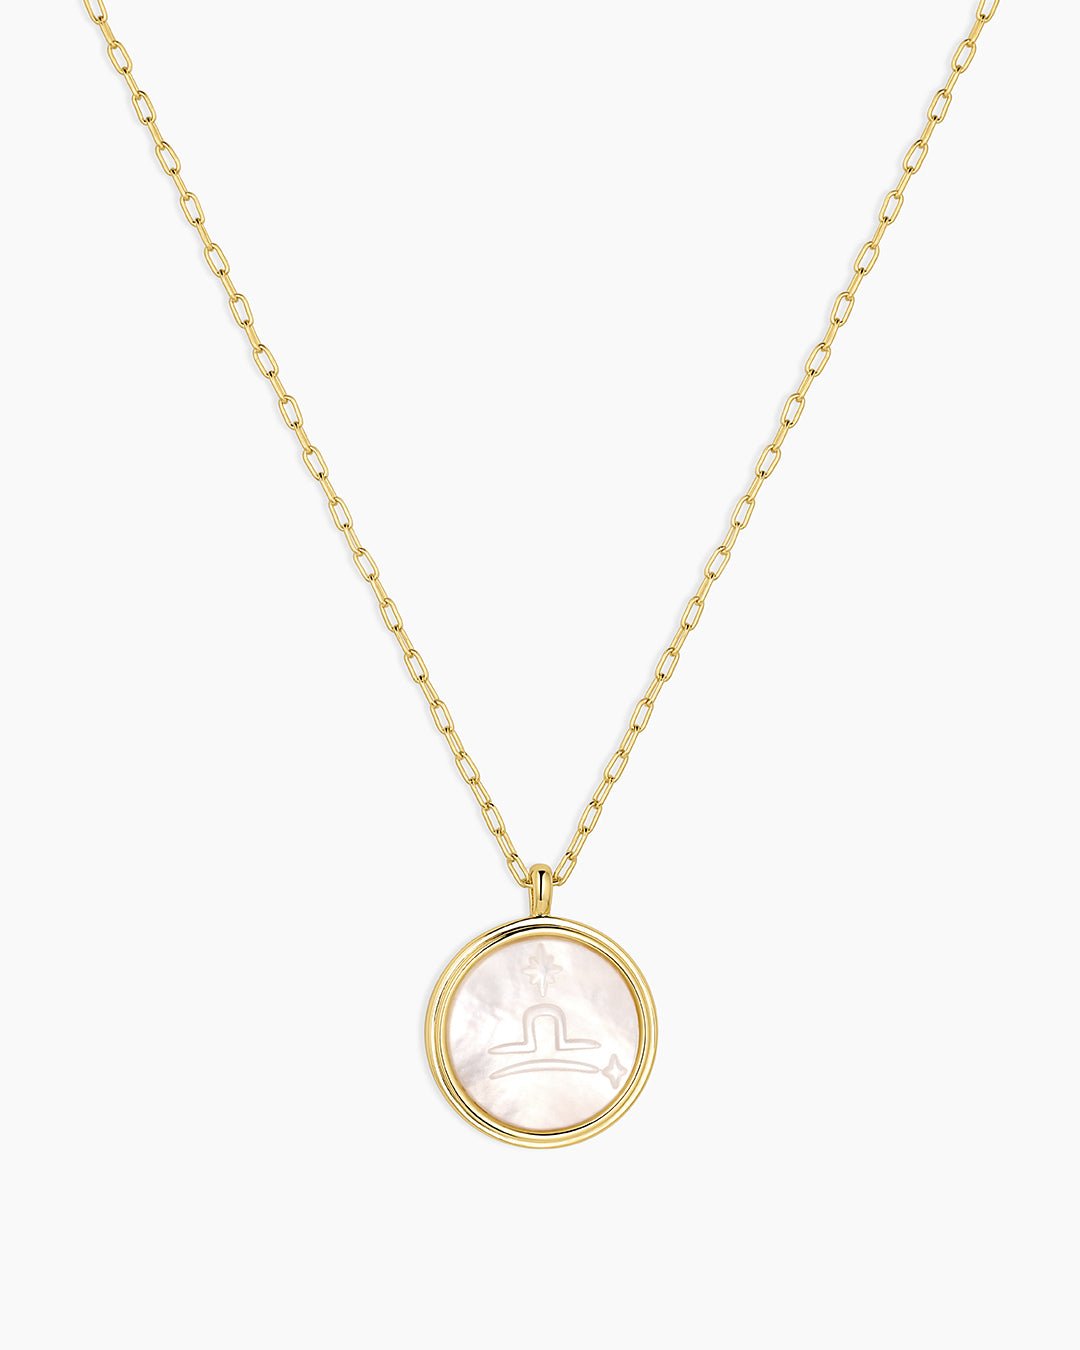 Zodiac Necklace - Scorpio, Astrology Coin Necklace, Scorpio Necklace || option::Gold Plated, Libra